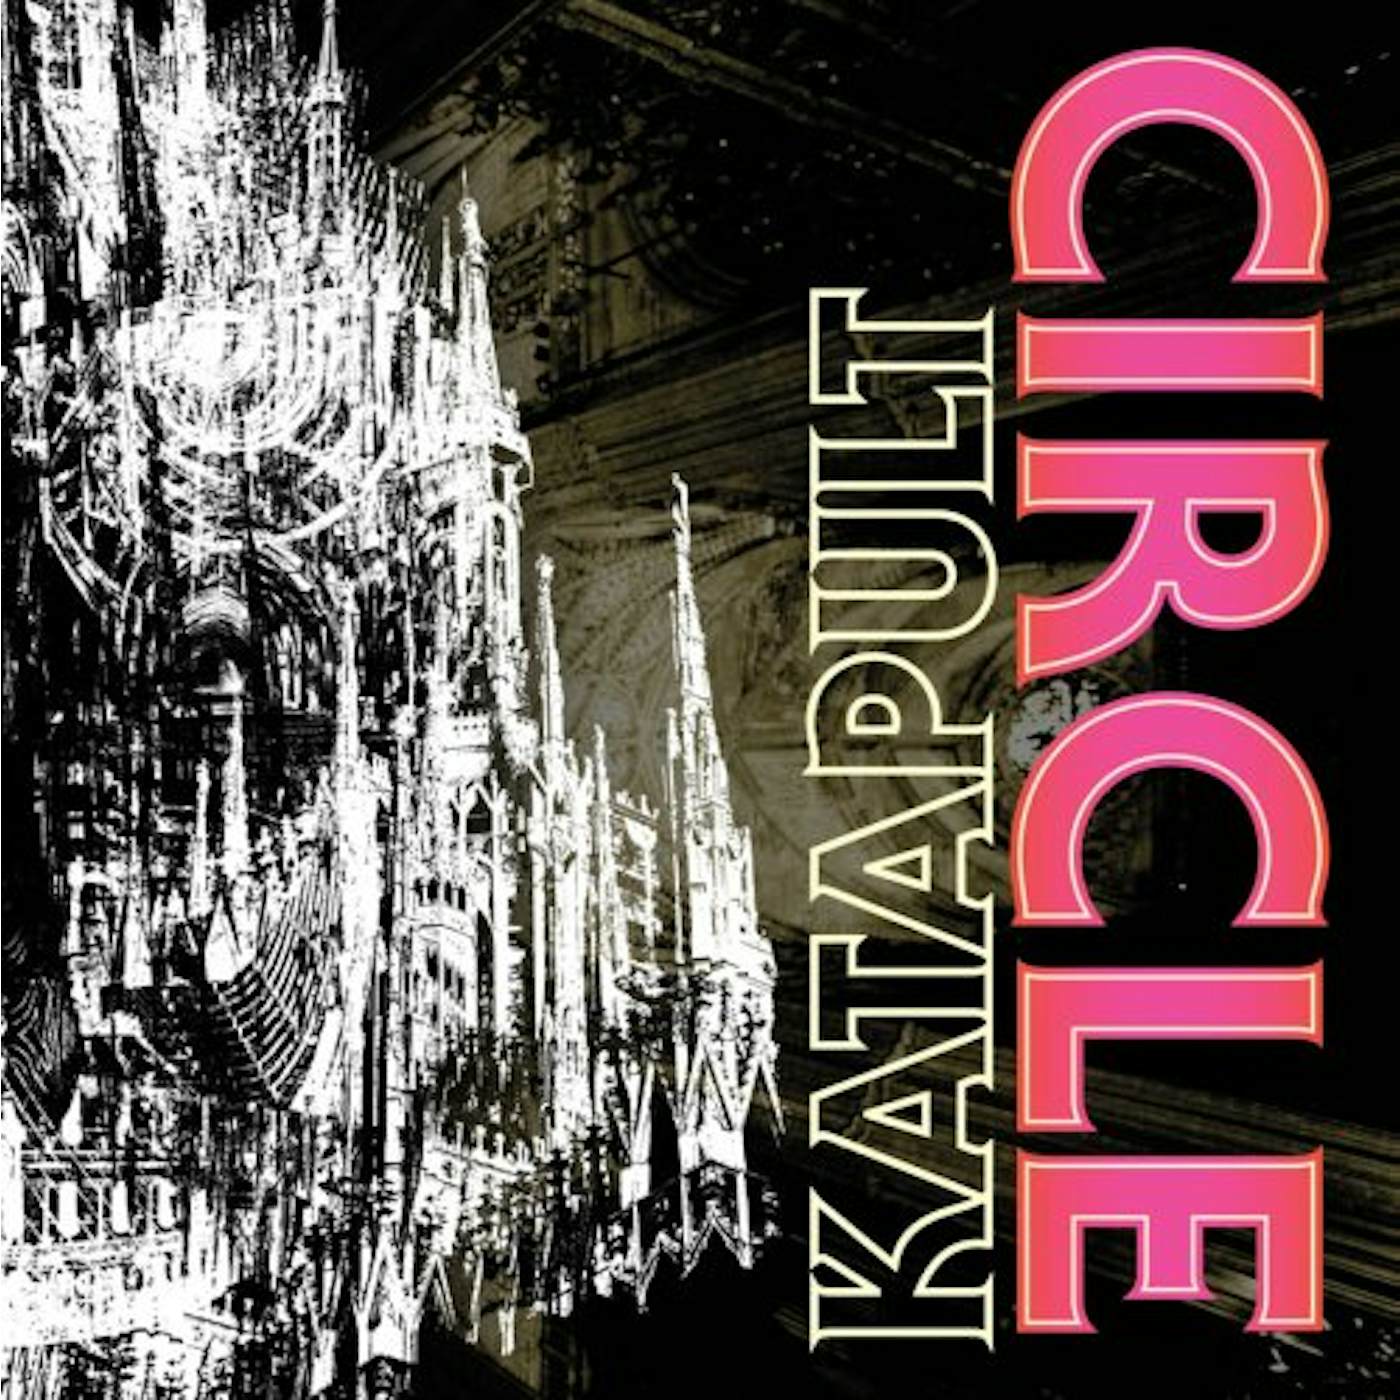 Circle KATAPULT CD